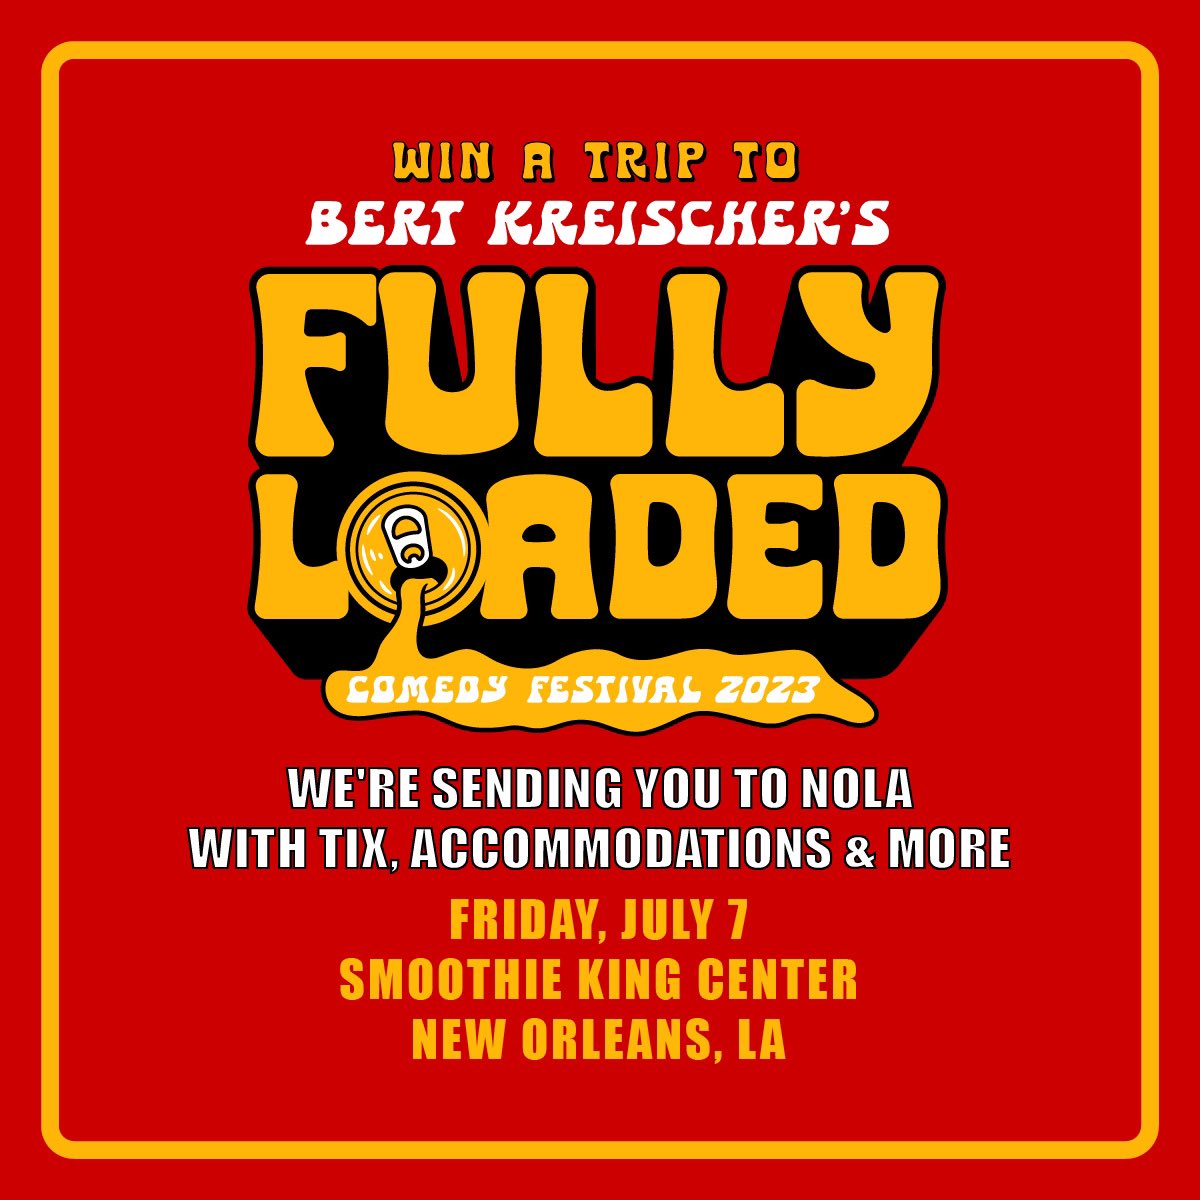 Wanna win 2 VIP tickets + travel + hotel to @fullyloadedfest in New Orleans? Enter here: network.dostuffmedia.com/events/2023/6/…

@bertkreischer @marknorm @TiffanyHaddish @bigjayoakerson @thatchaddaniels @ralphbarbosa03 #RosebudBaker @ciphasounds